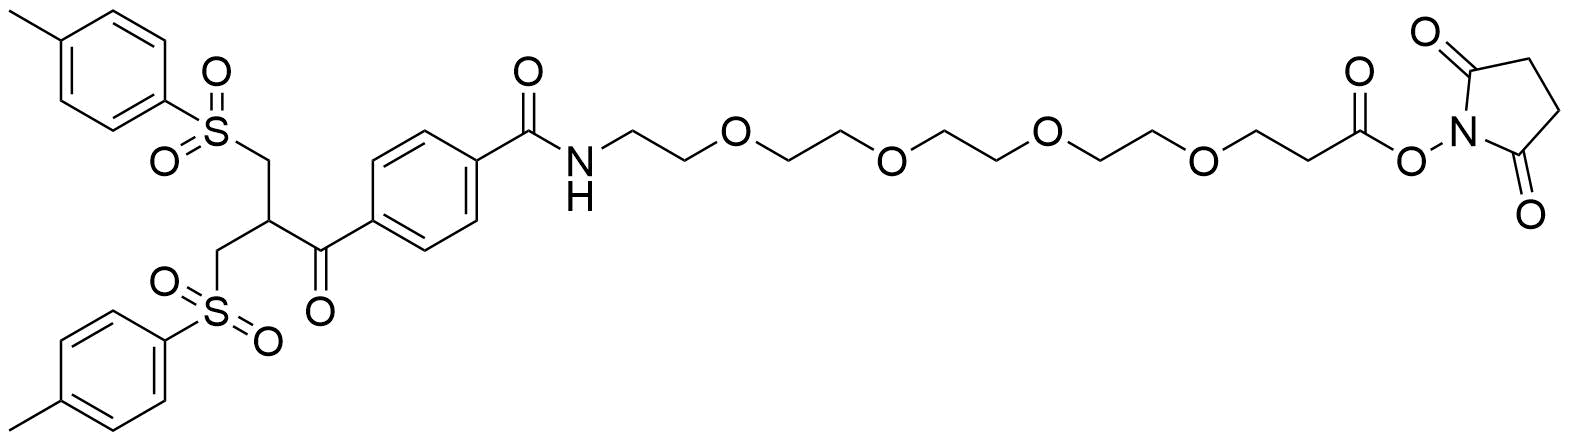 Bis-sulfone-PEG4-NHS ester